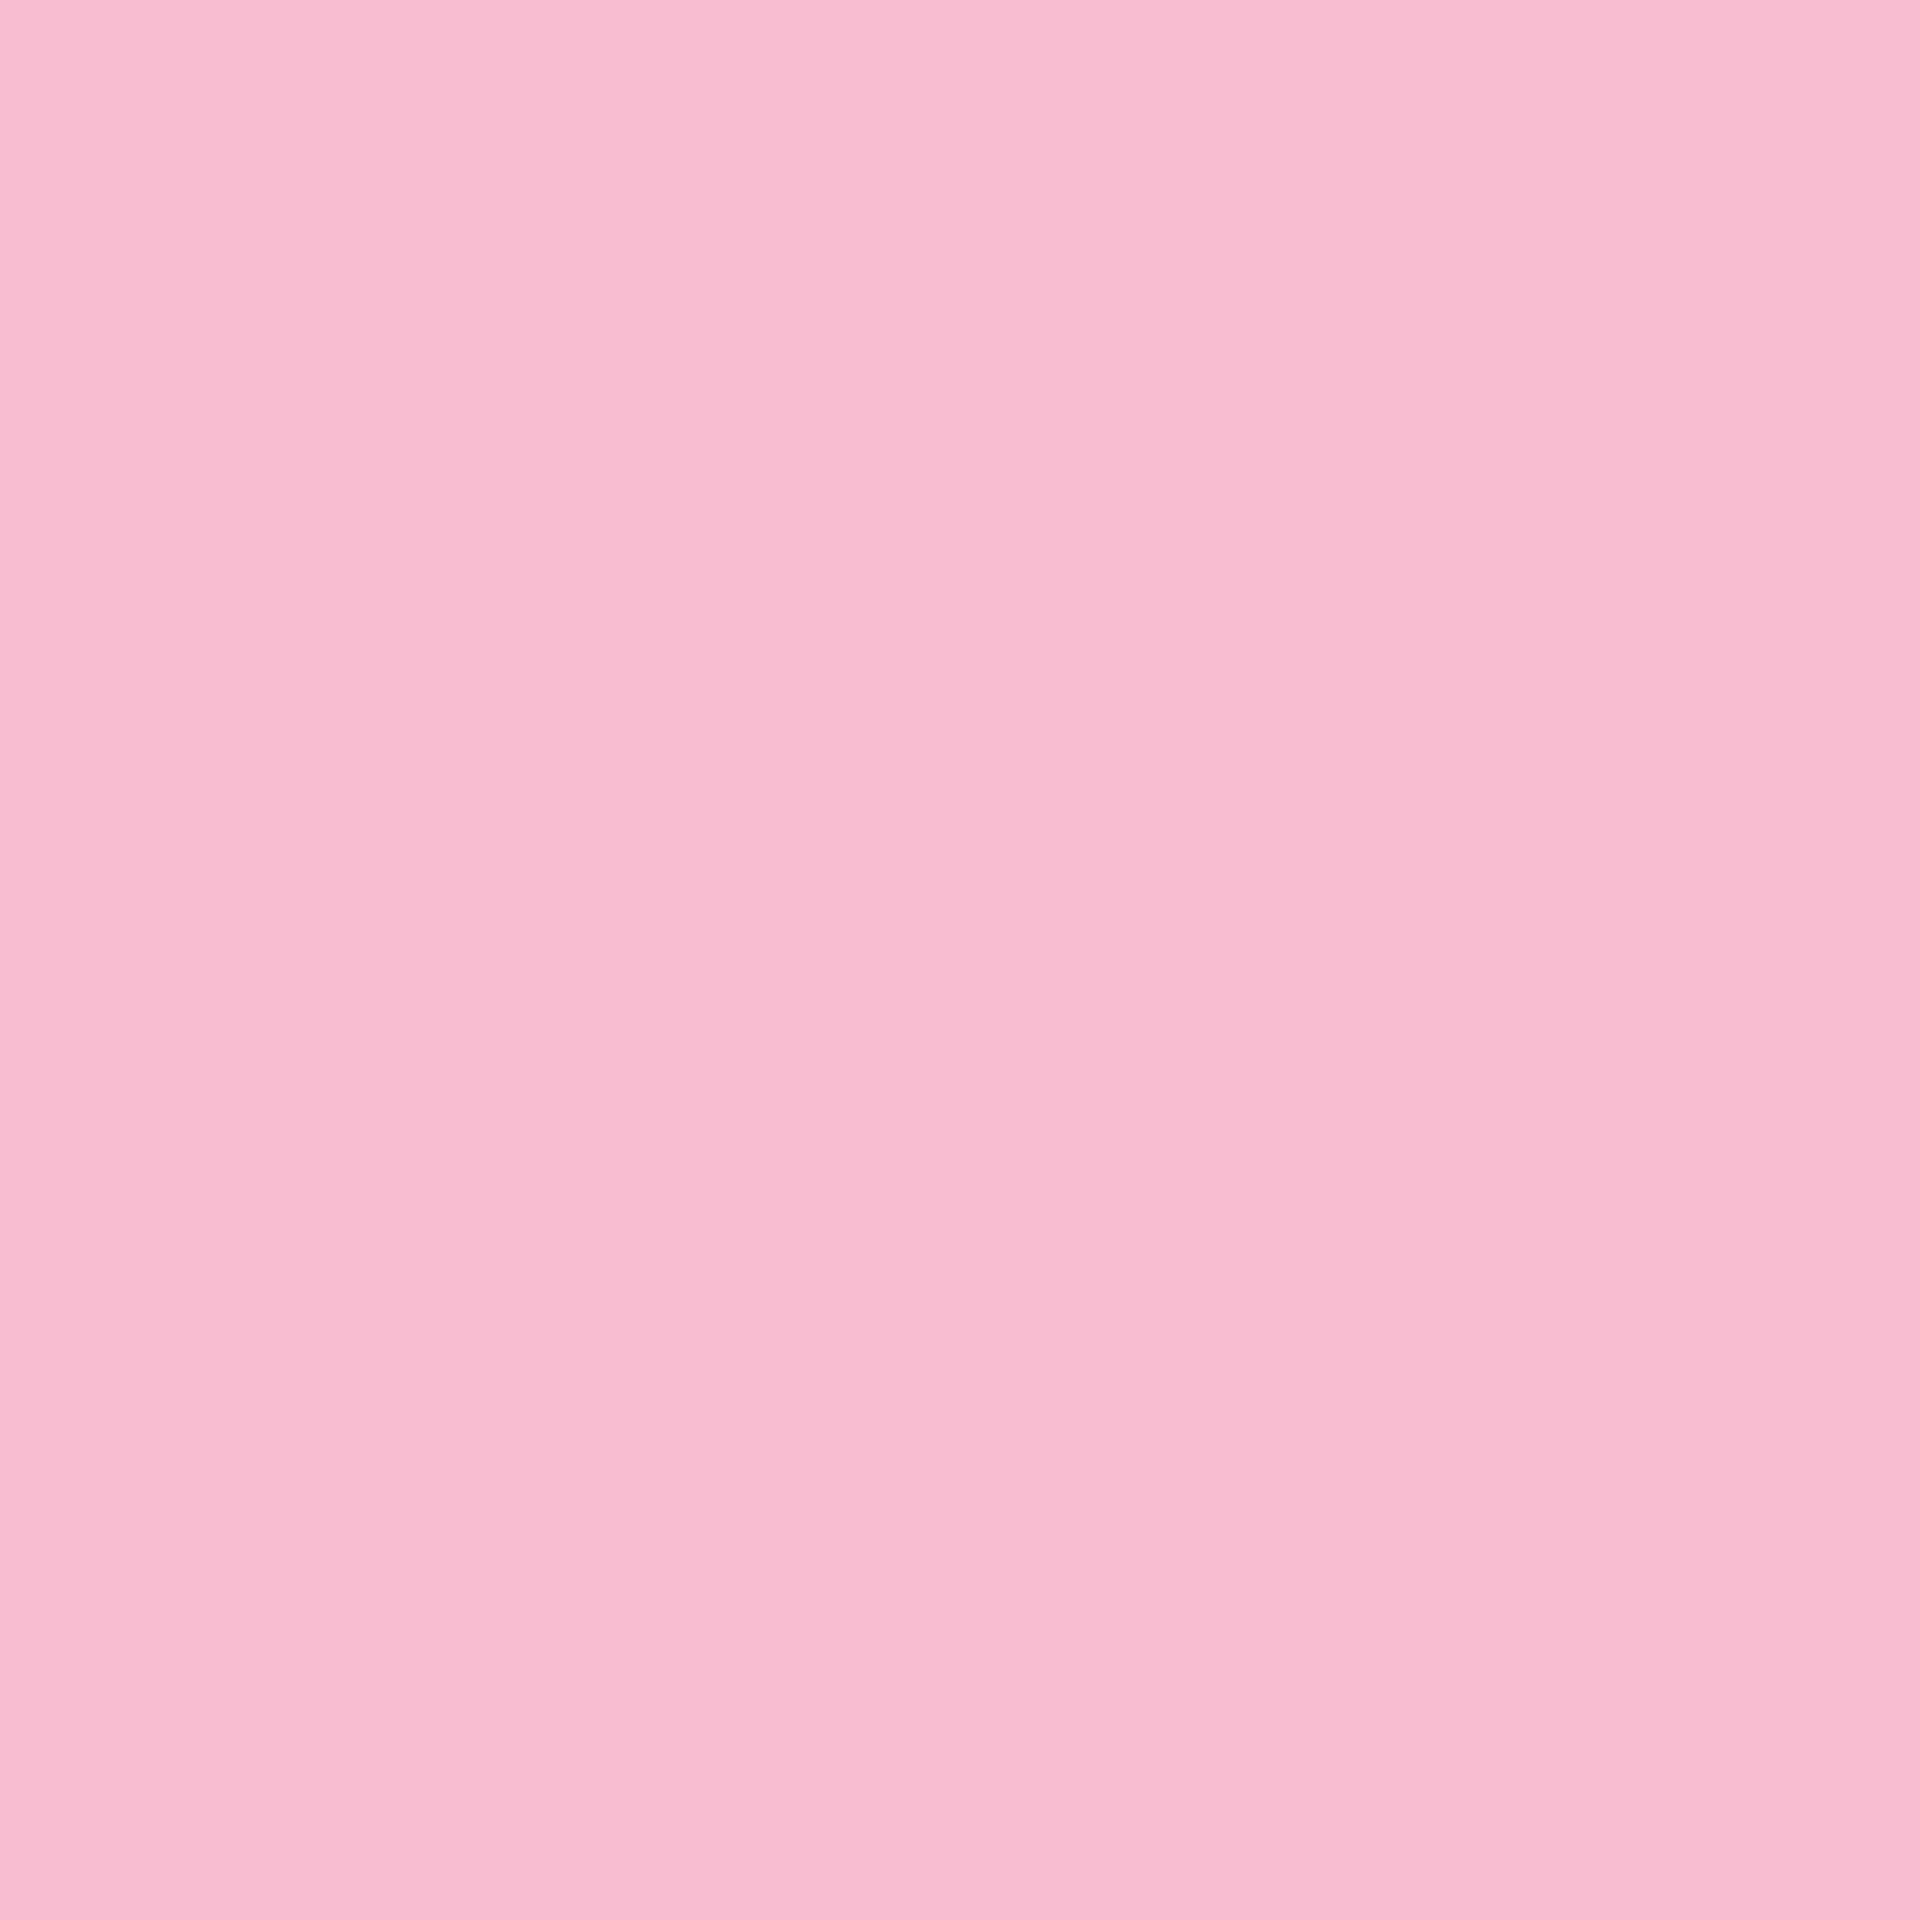 Delightful Aesthetic of Baby Pink Wallpaper